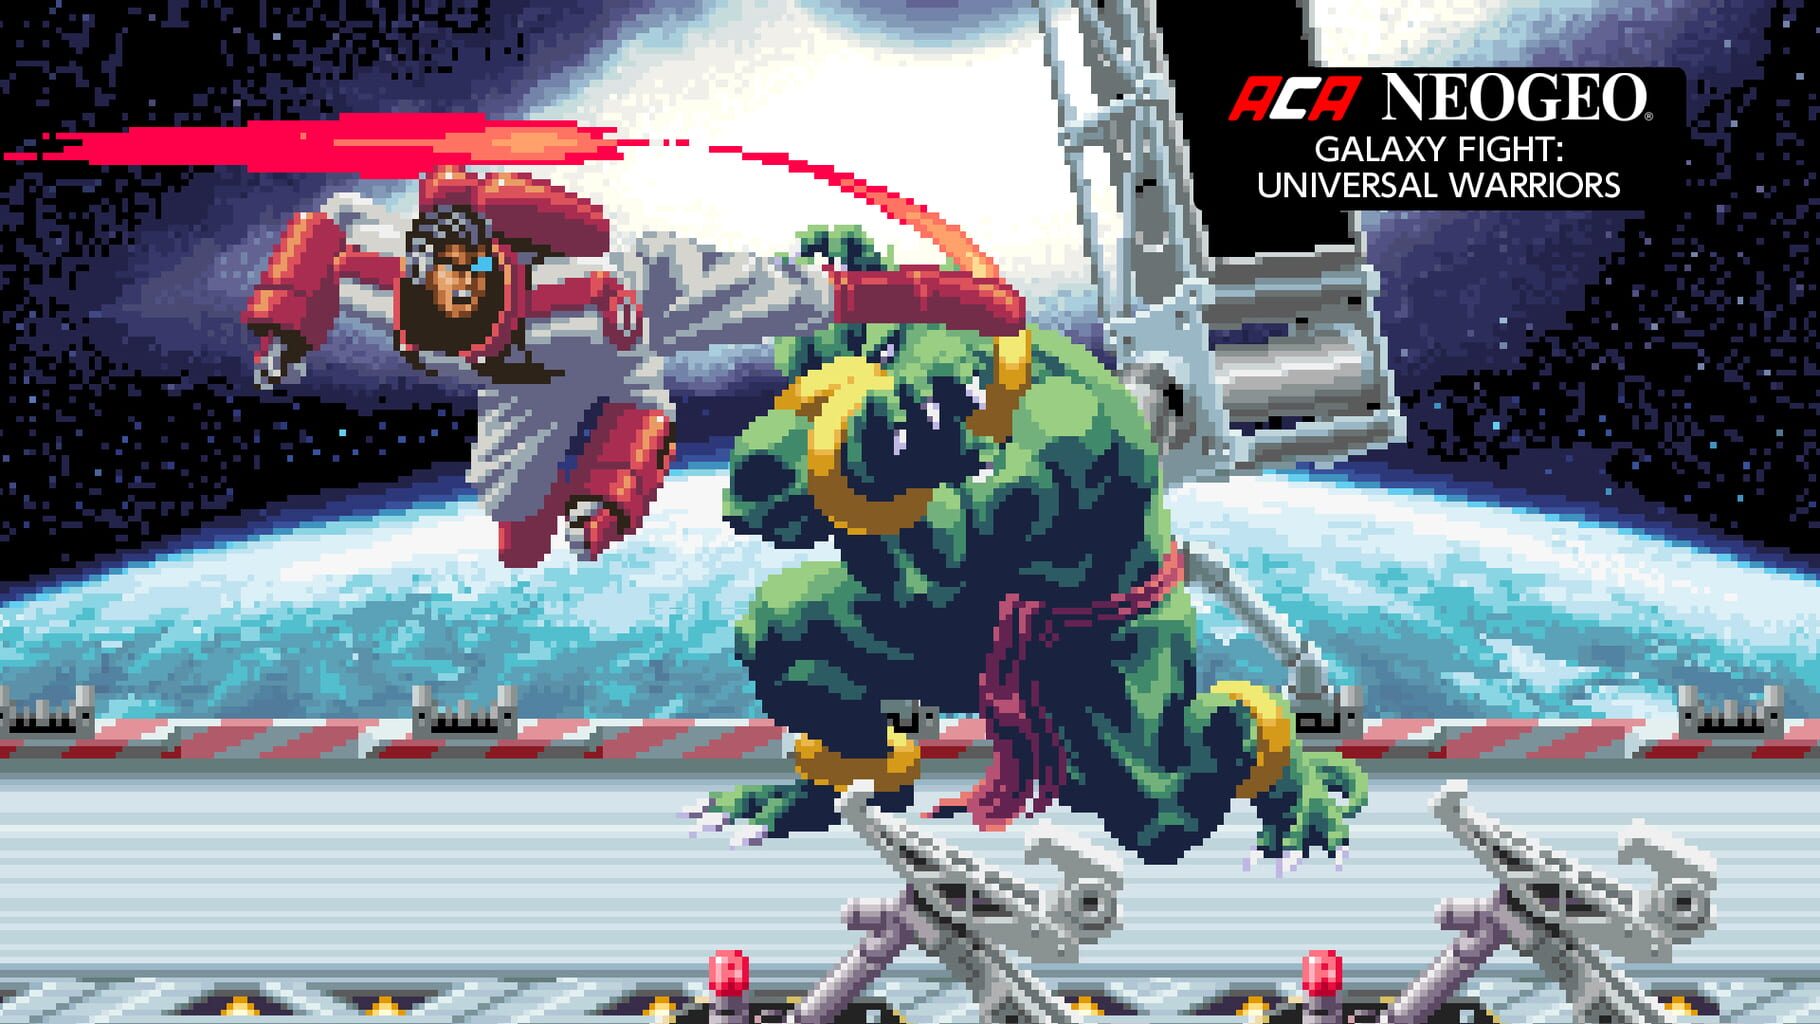 ACA Neo Geo: Galaxy Fight - Universal Warriors artwork